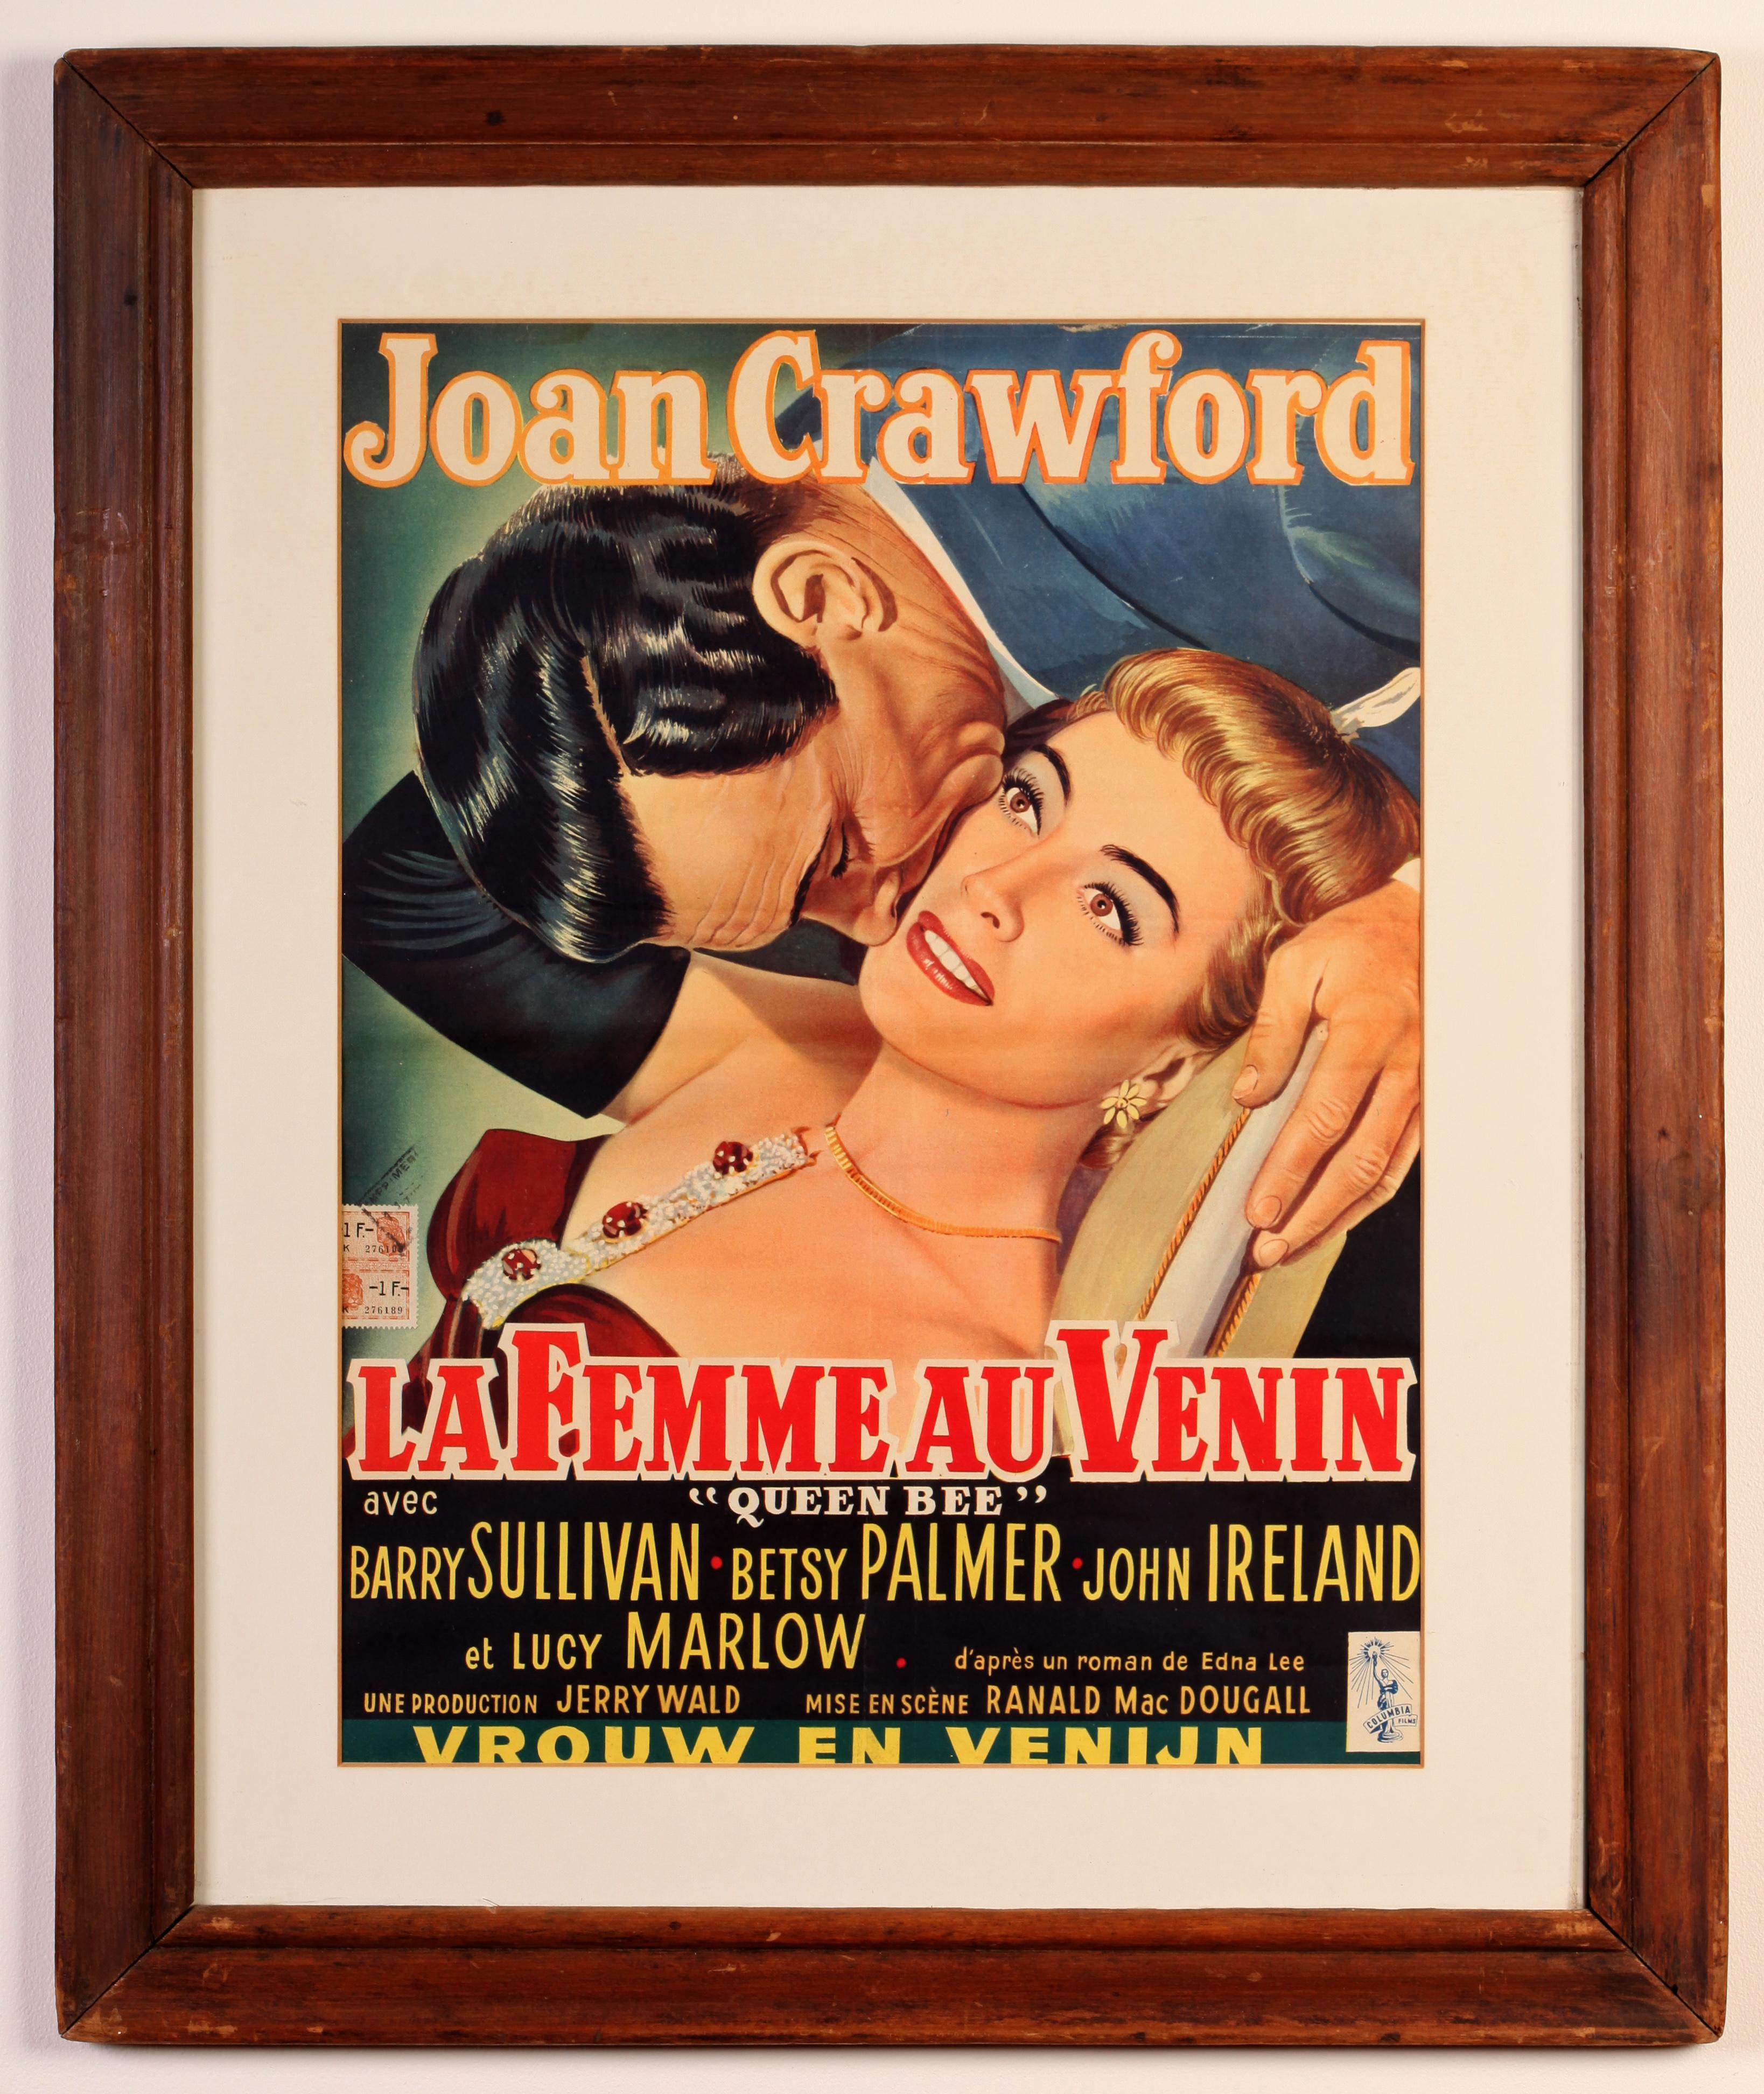 Fabulous pair of vintage movie posters - Joan Crawford in Queen Bee (1955) and Ingrid Bergman and Leslie Howard in Intermezzo (1939) but released in Belgium in 1946. Both of these are original Belgium movie posters, Queen Bee with the original